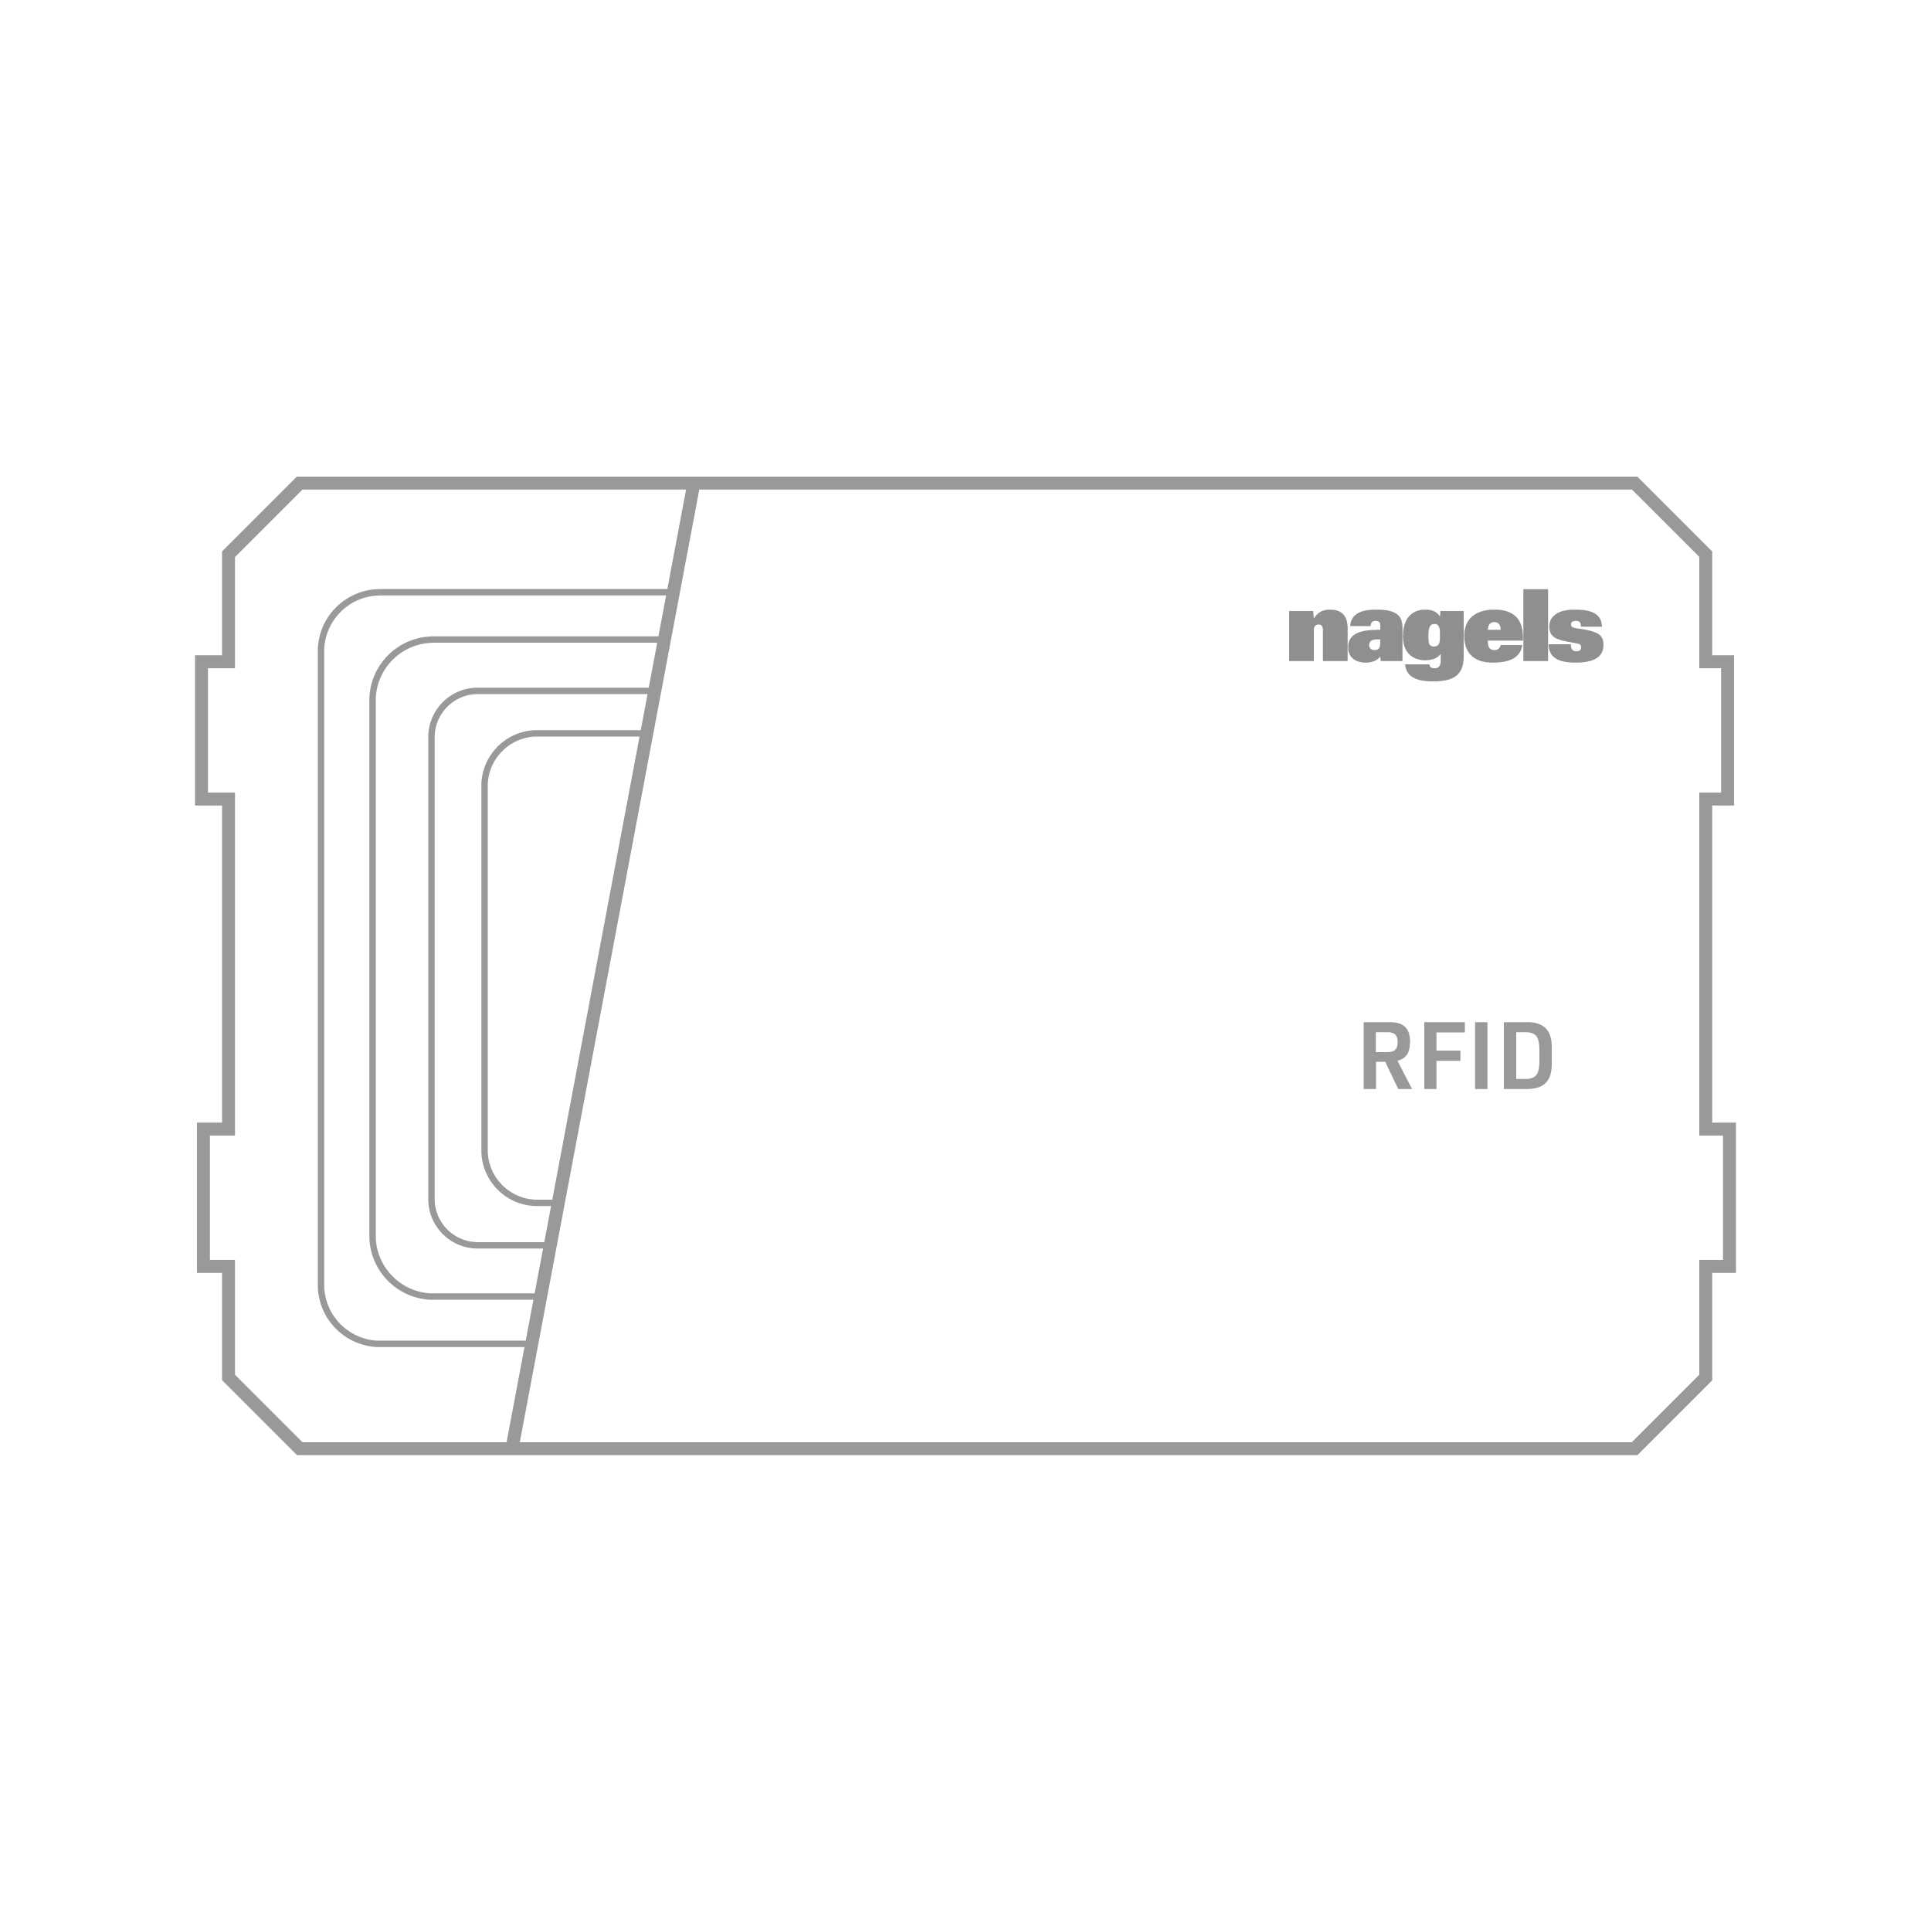 Billets RFID